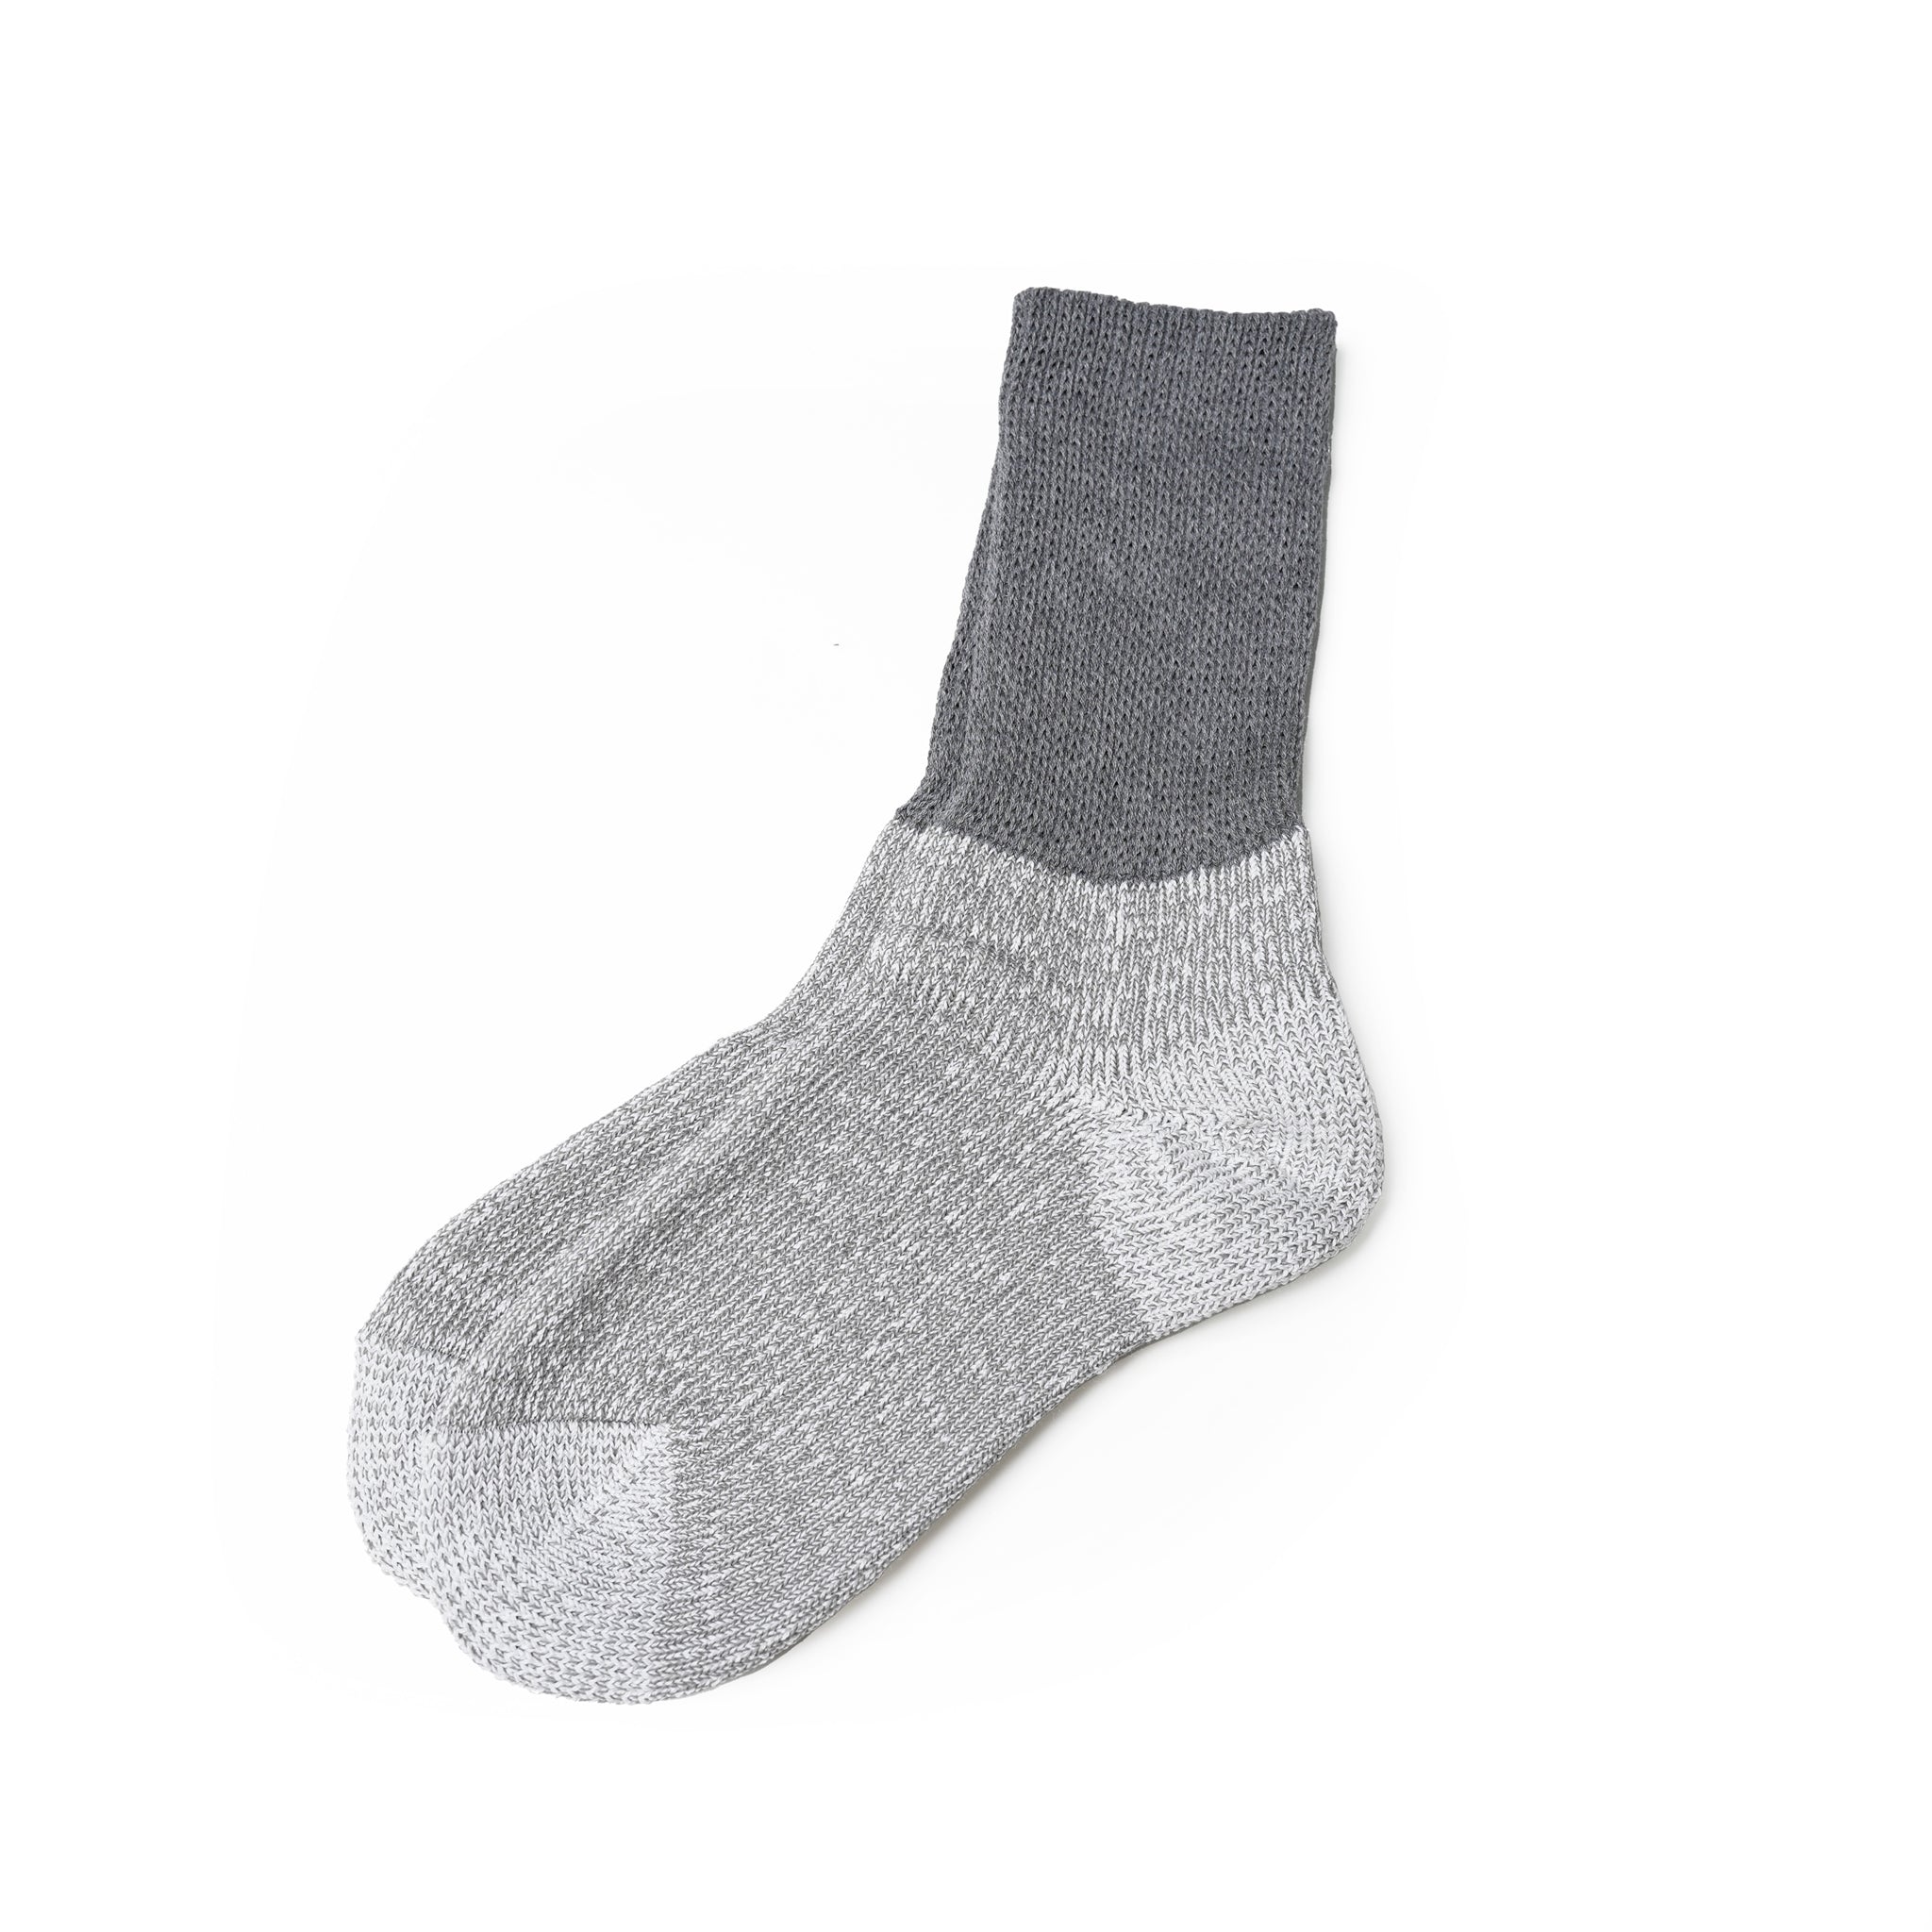 Name:CHUCK Socks| Color:Navy/Sand Beige/Gray| Size:Free 【CATTA_カッタ】【ネコポス選択可能】